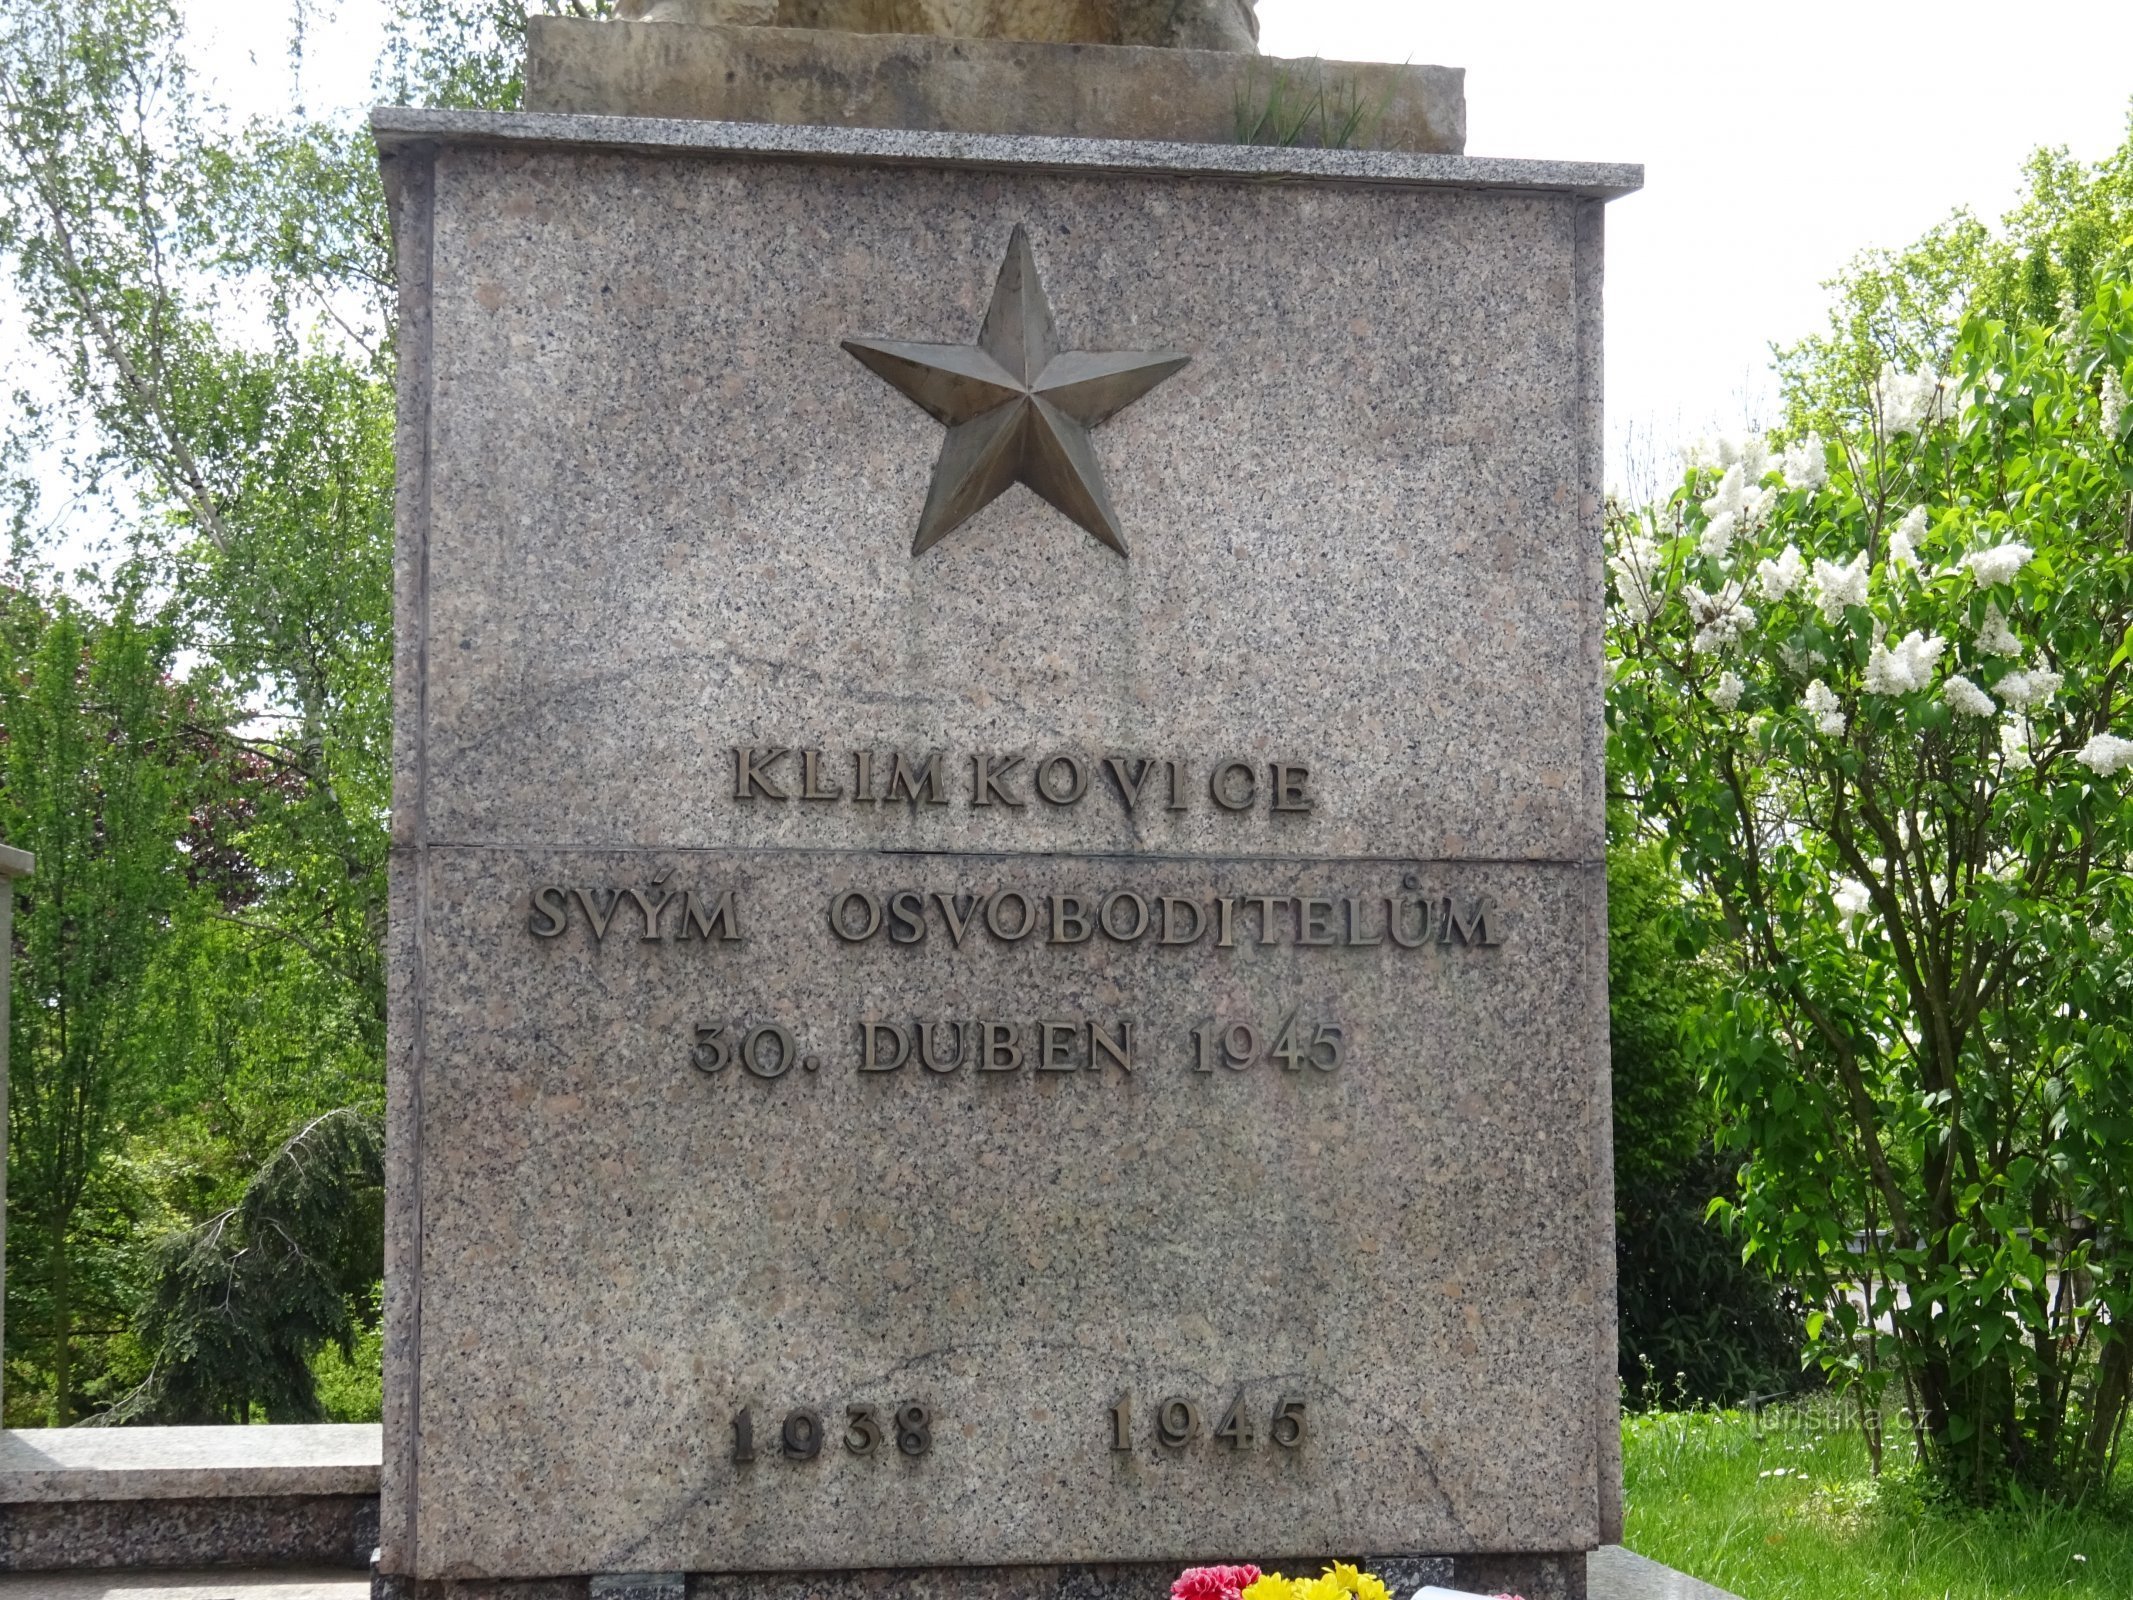 Klimkovice - monument II. world.wars